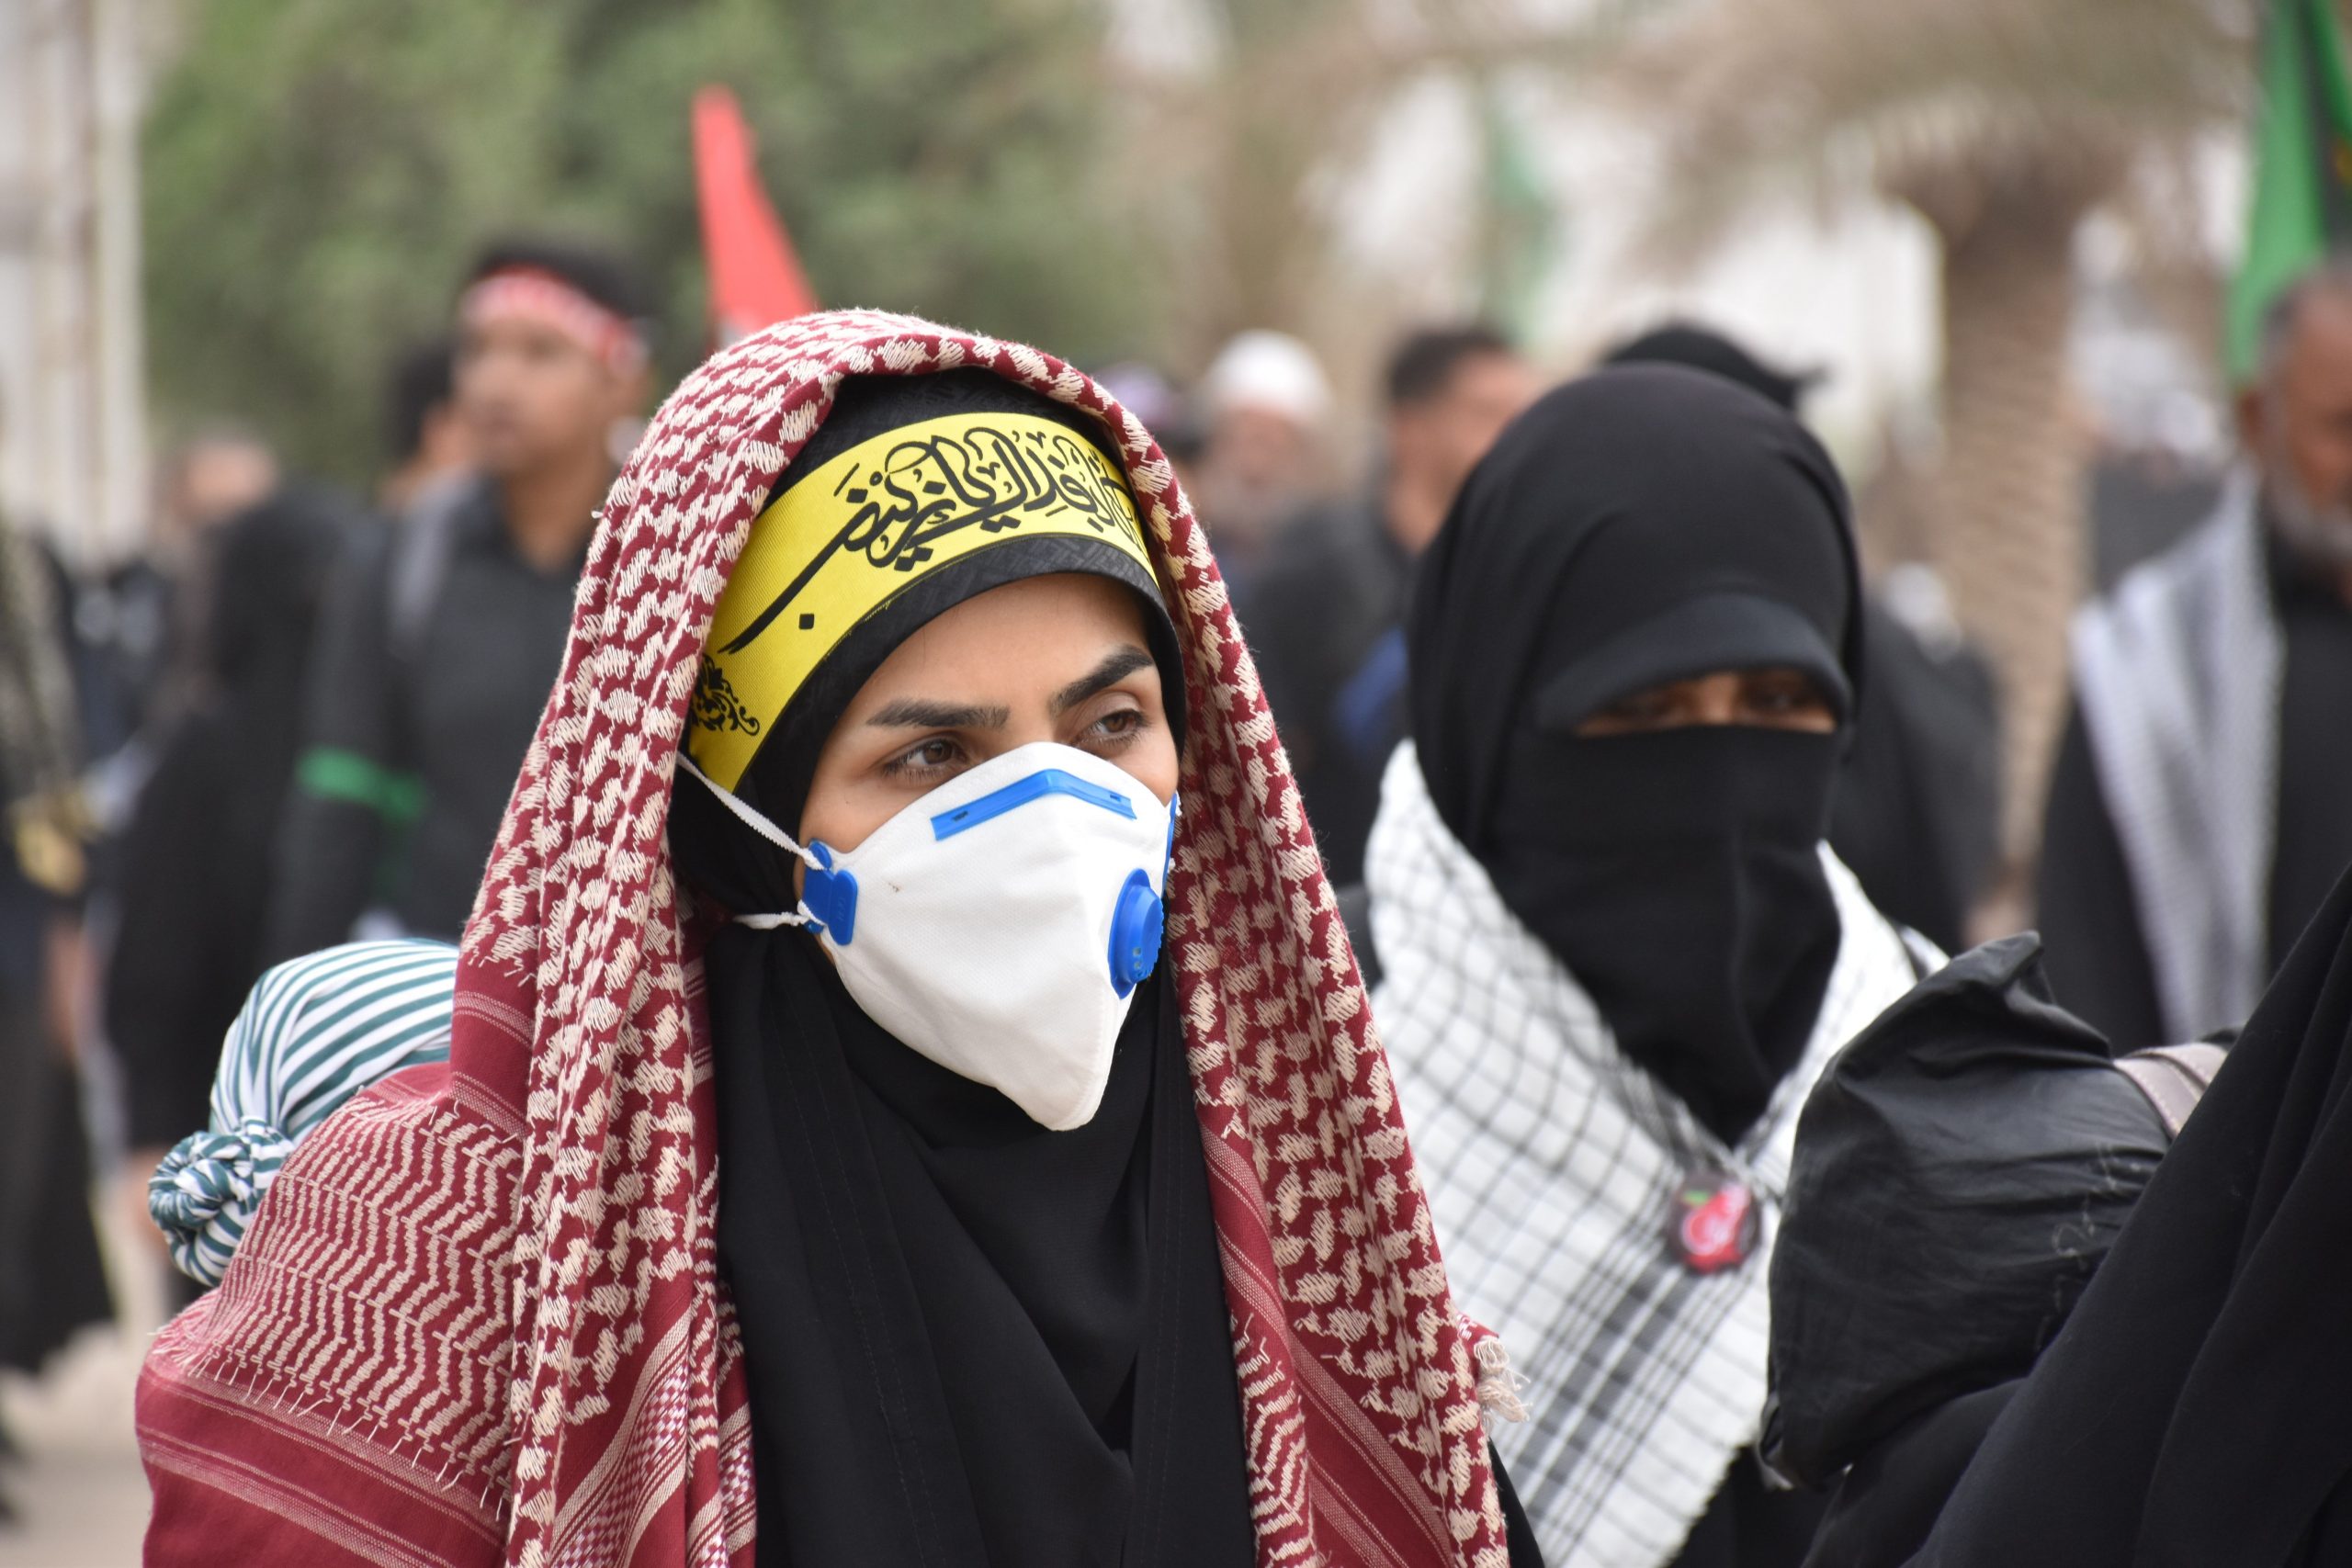 Despite virus, Shiite pilgrims gather for mourning month of Muharram